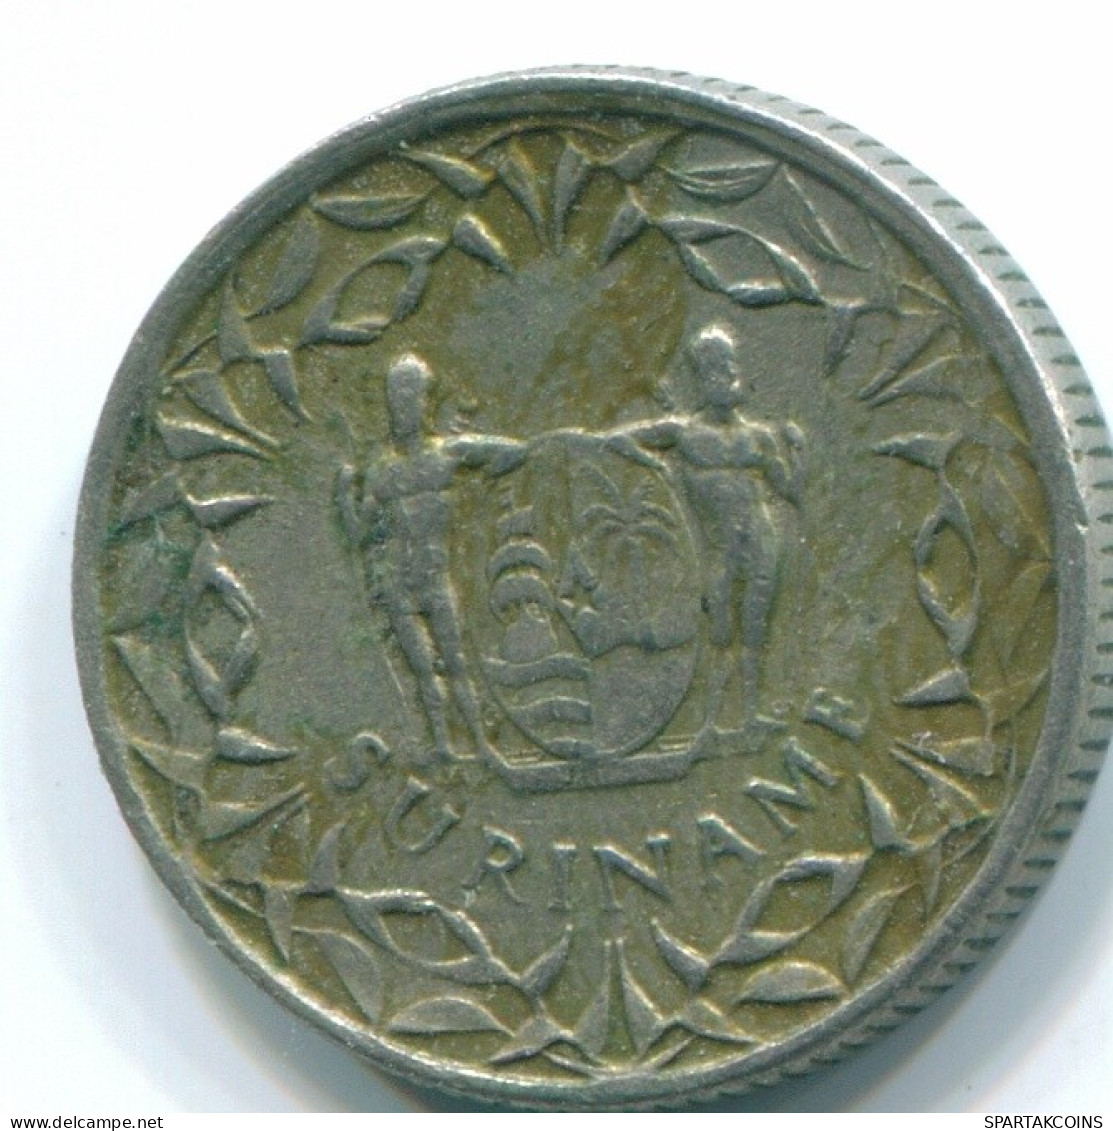 10 CENTS 1966 SURINAME Netherlands Nickel Colonial Coin #S13264.U.A - Surinam 1975 - ...